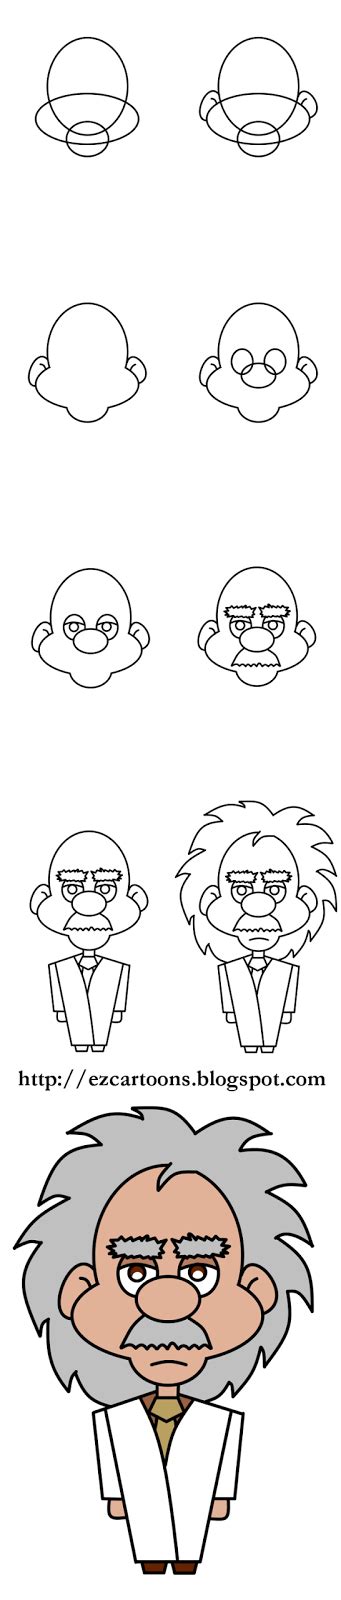 Easy To Draw Cartoons How To Draw Albert Einstein